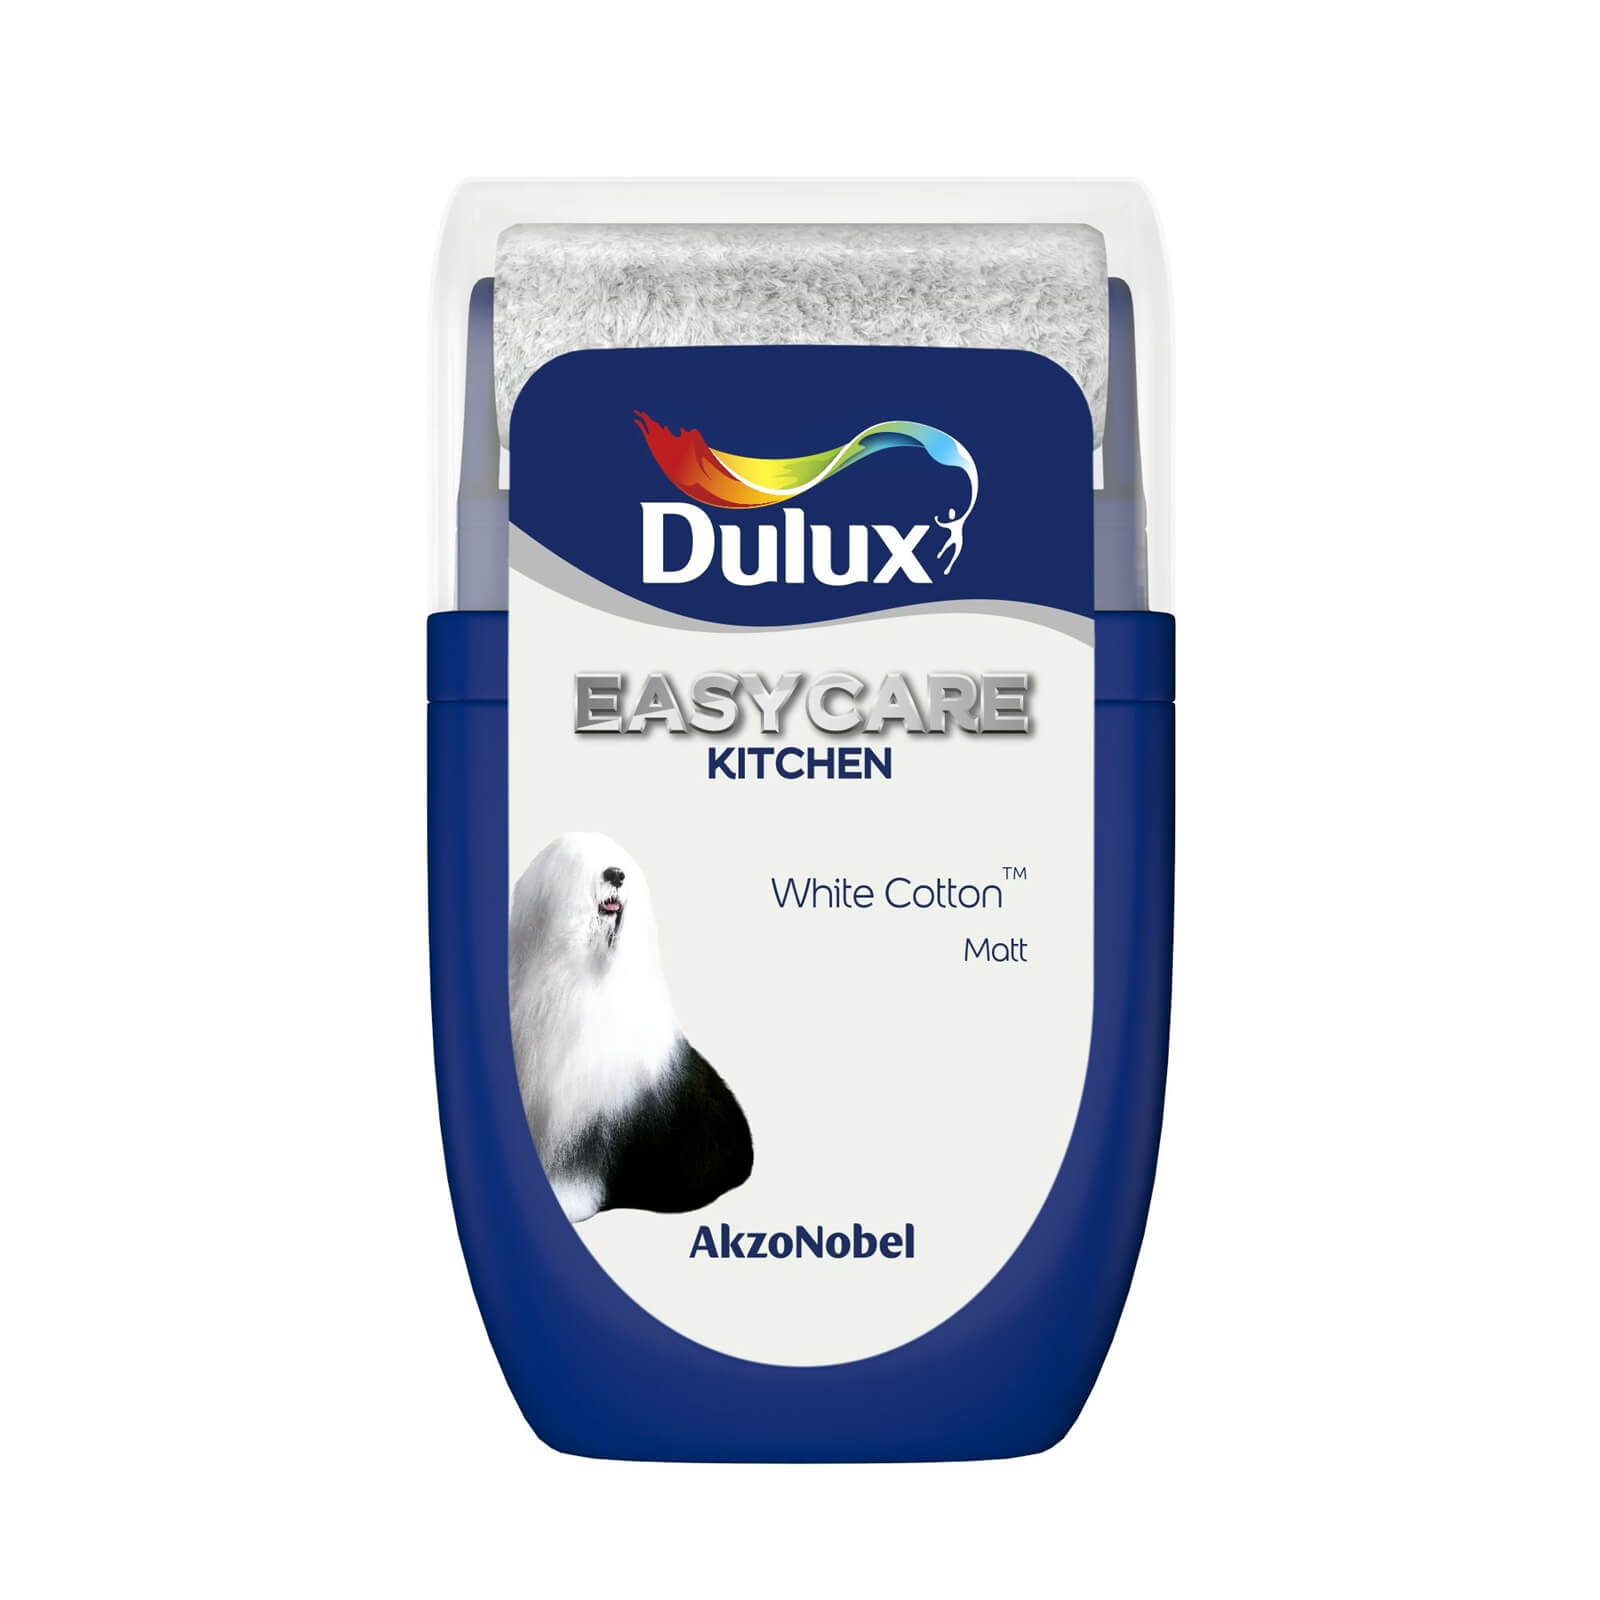 Dulux Easycare Kitchen White Cotton Tester Paint - 30ml